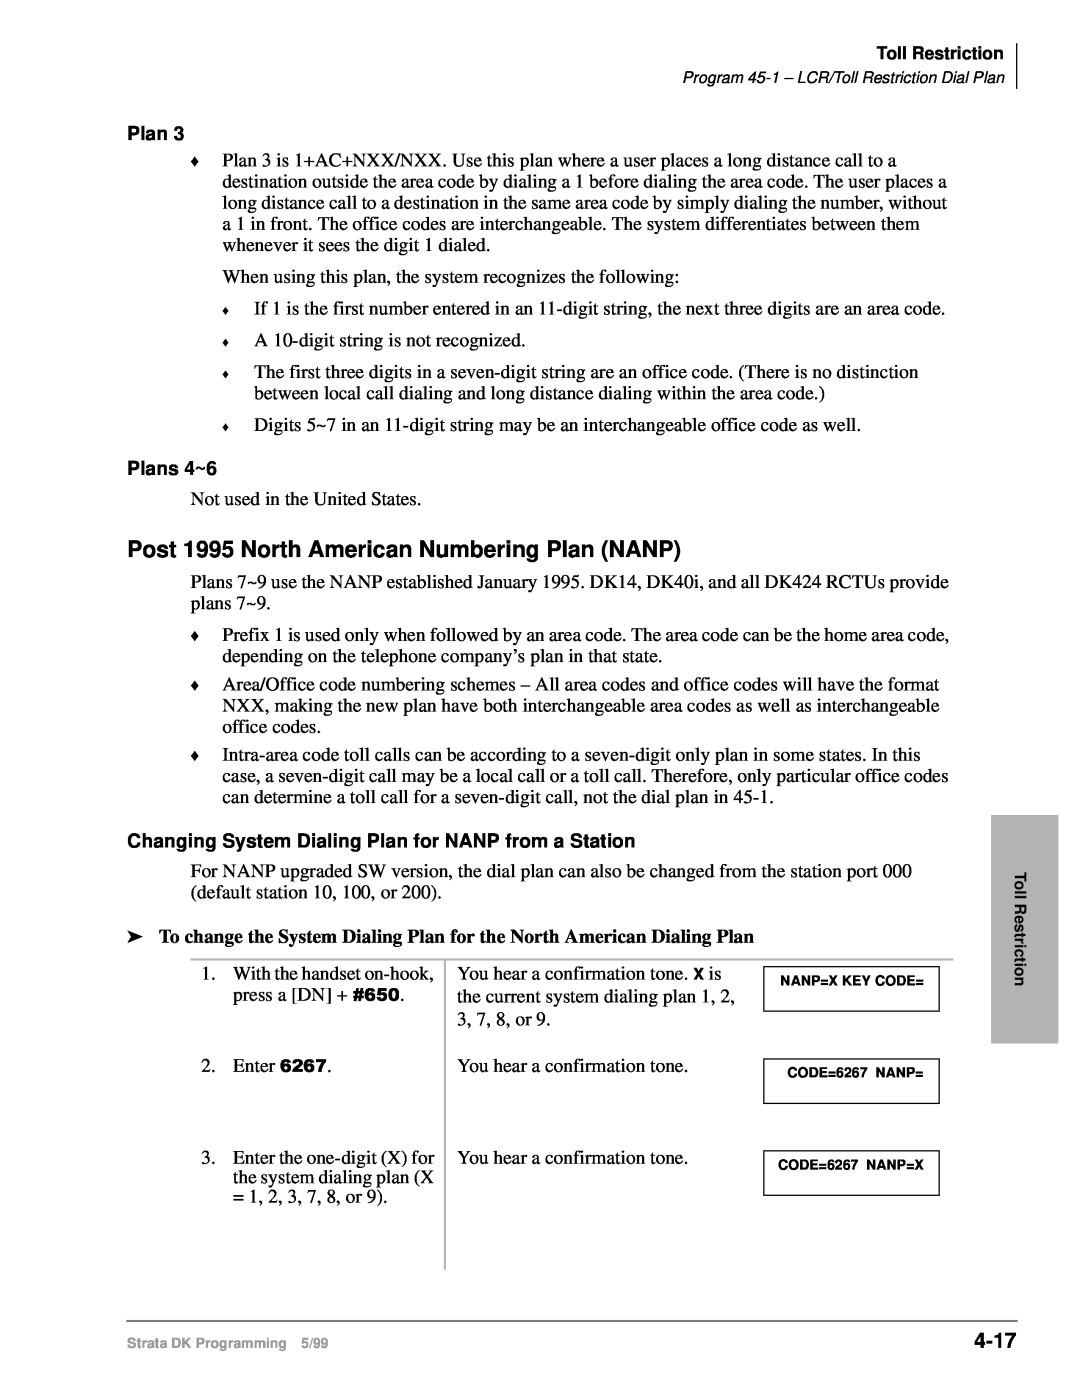 Toshiba dk14 manual Post 1995 North American Numbering Plan NANP, 4-17, Plans 4~6 